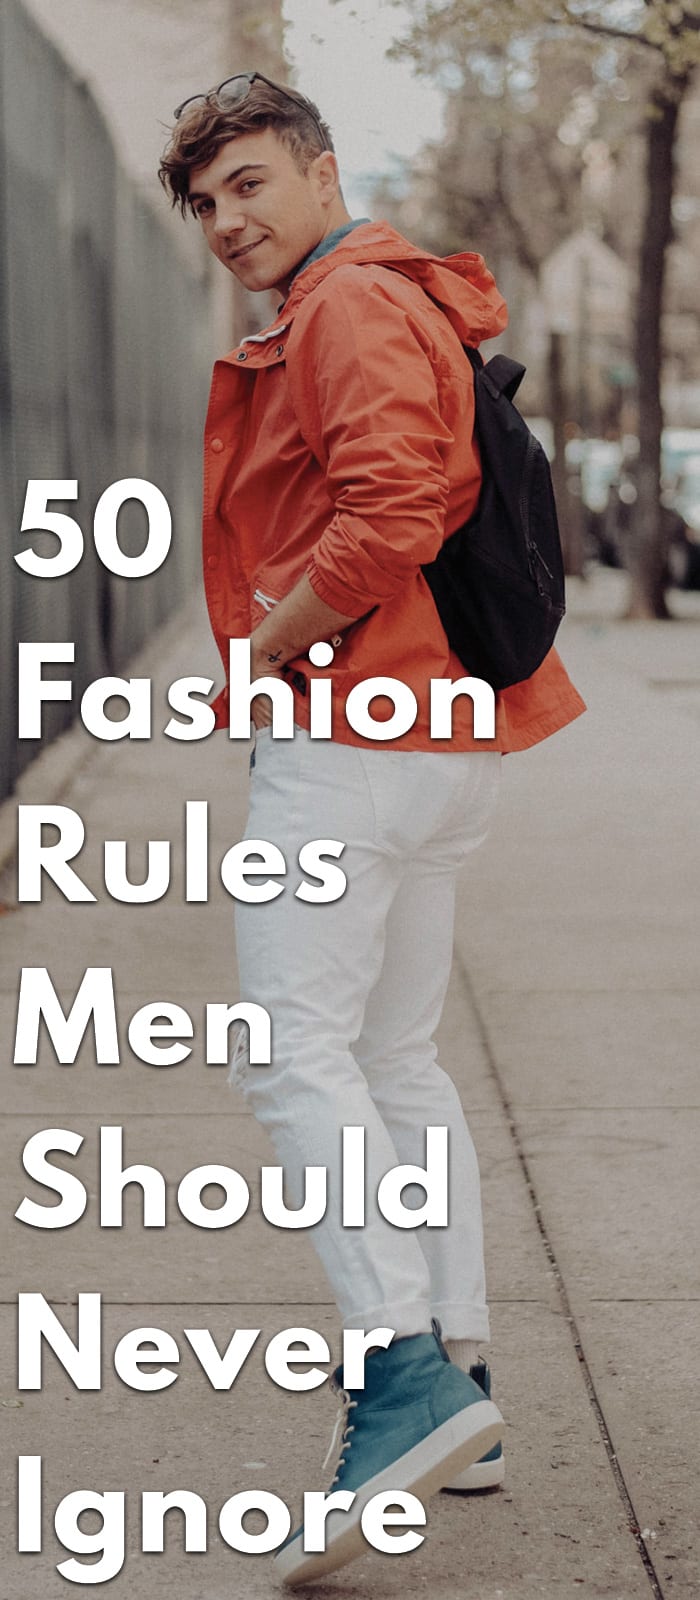 50-Fashion-Rules-Men-Should-Never-Ignore.